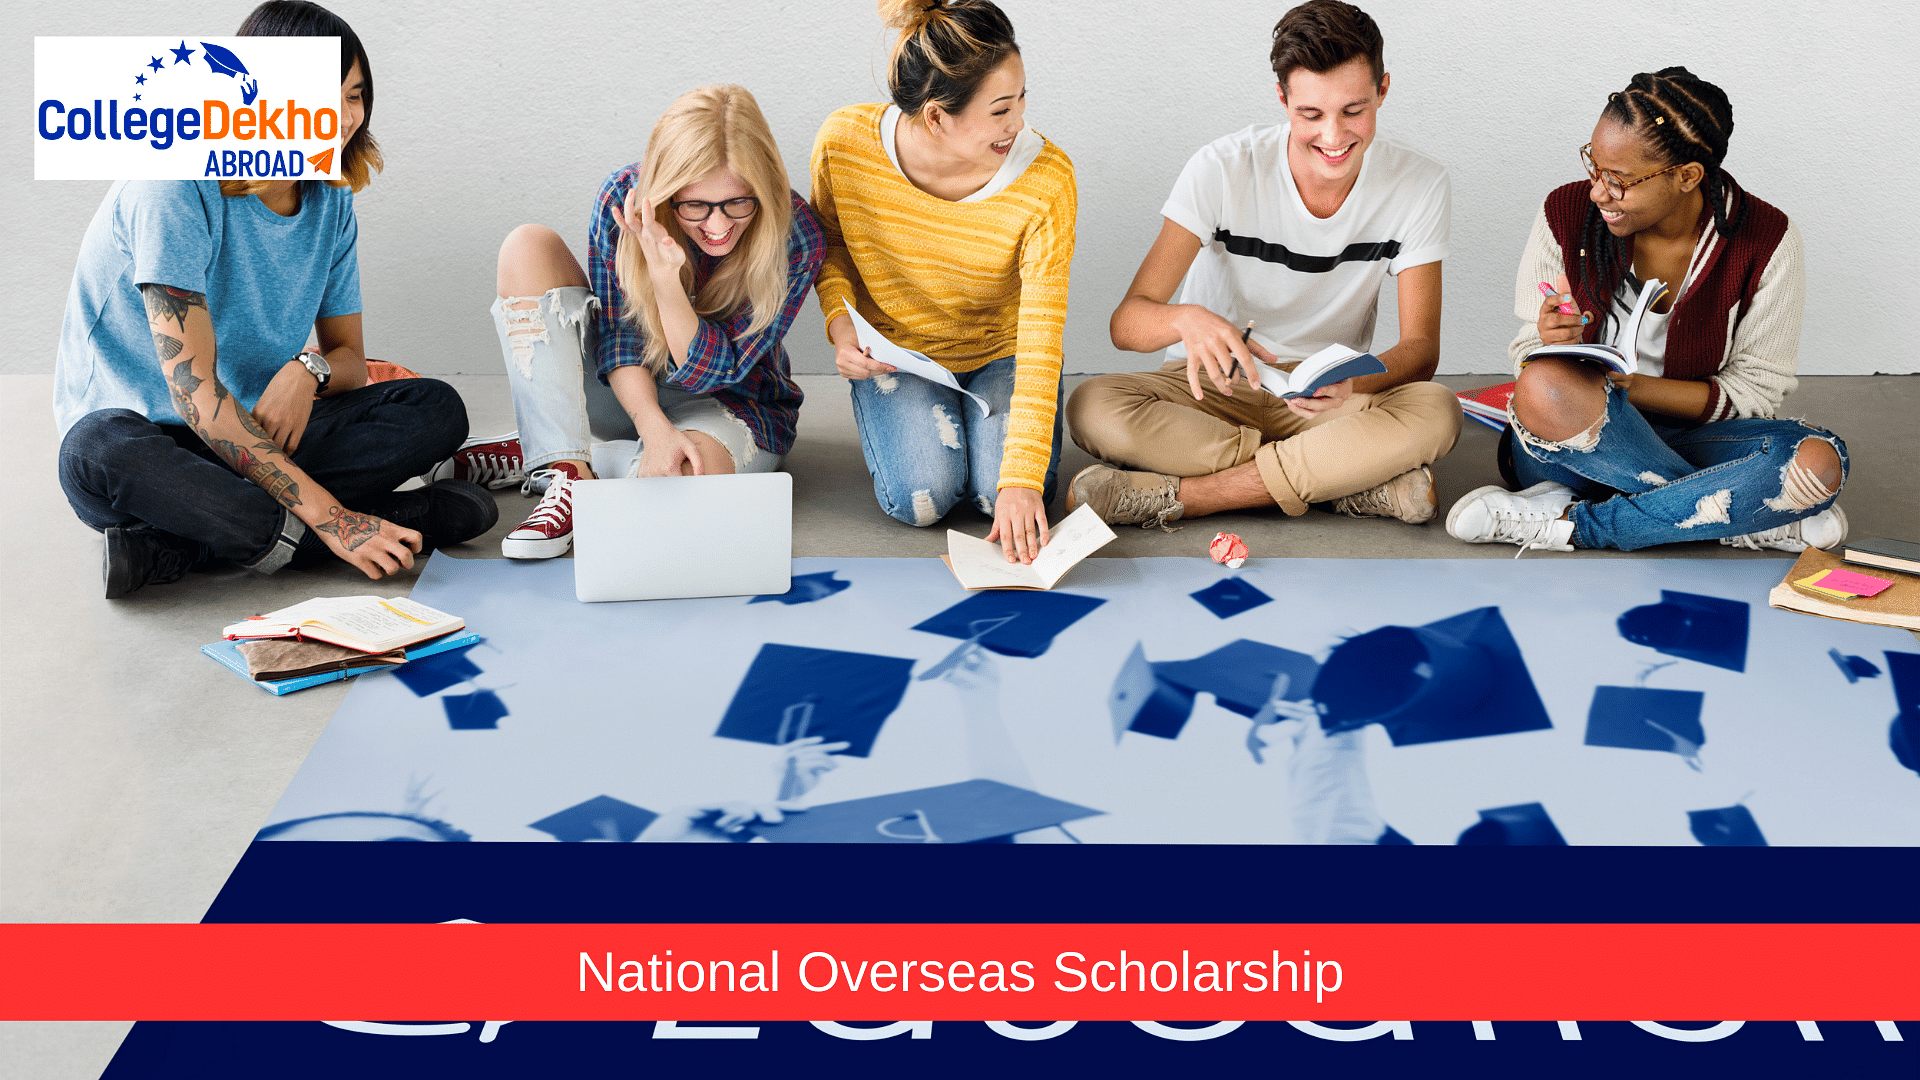 National Overseas Scholarship